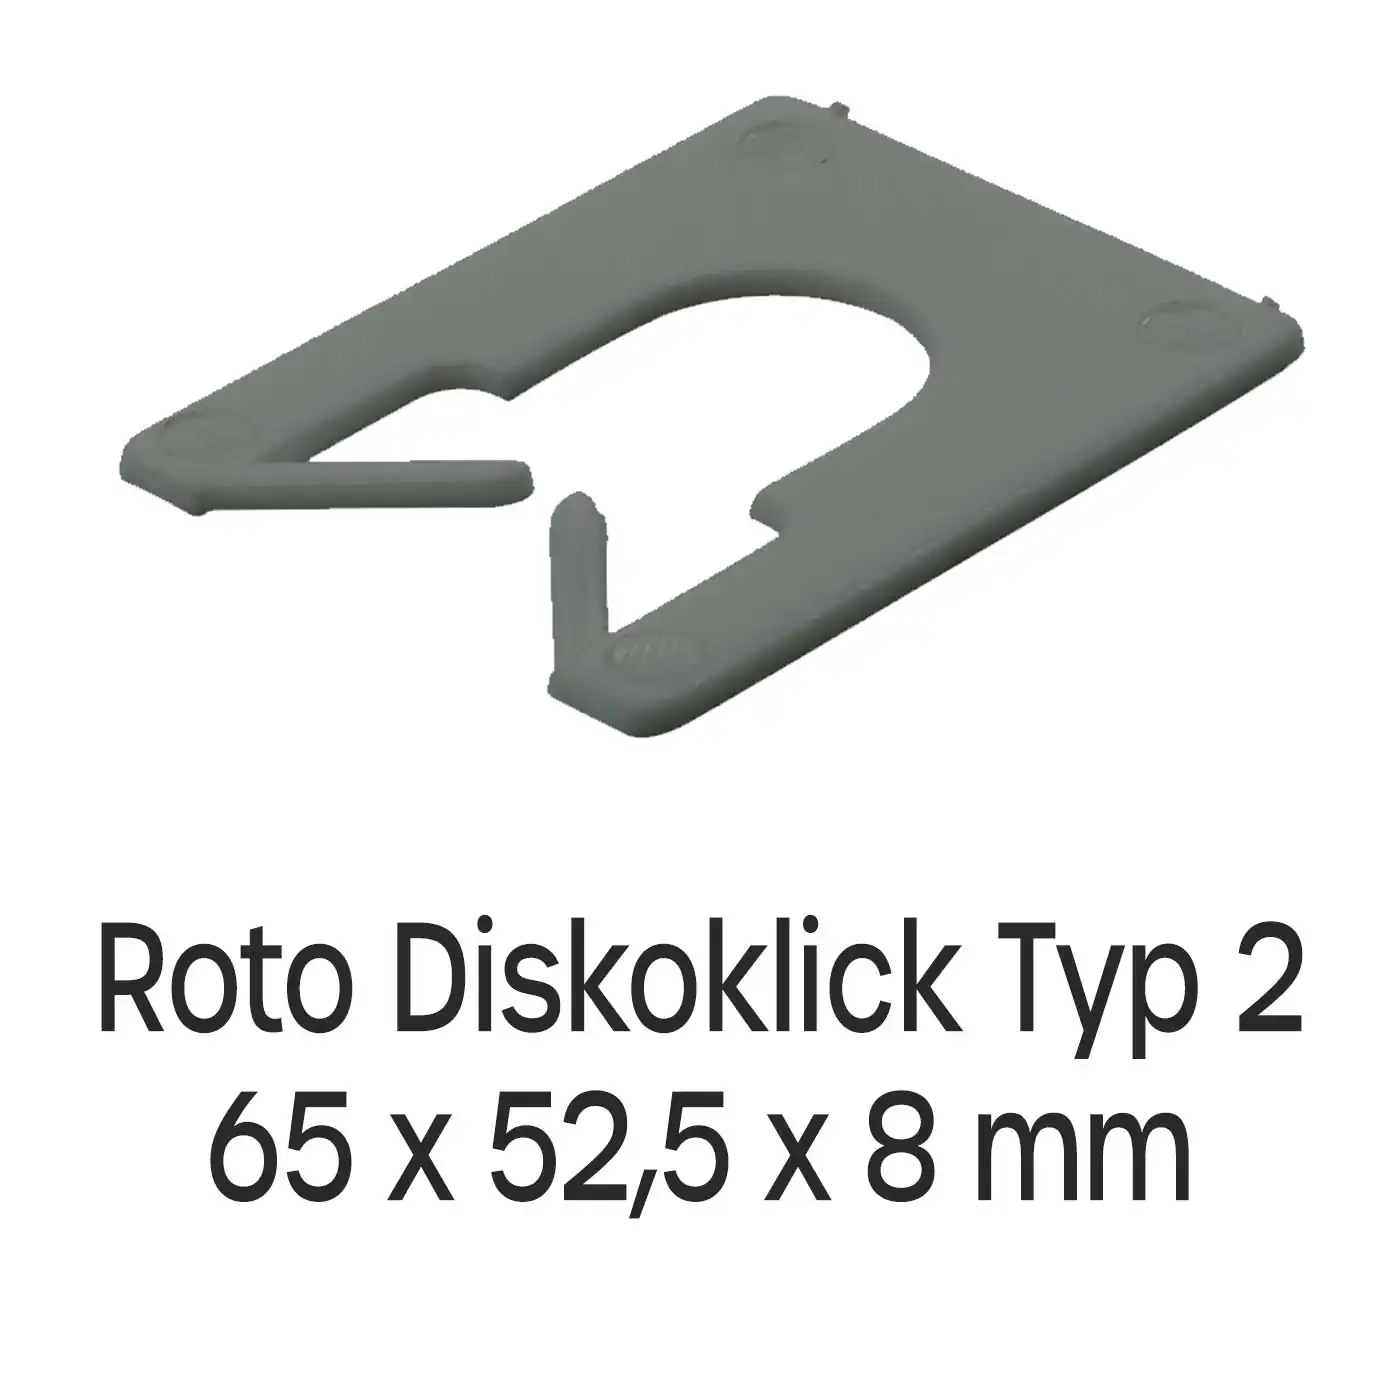 Distanzplatten Roto Diskoklick Typ 2 65 x 52,5 x 8 mm 500 Stück